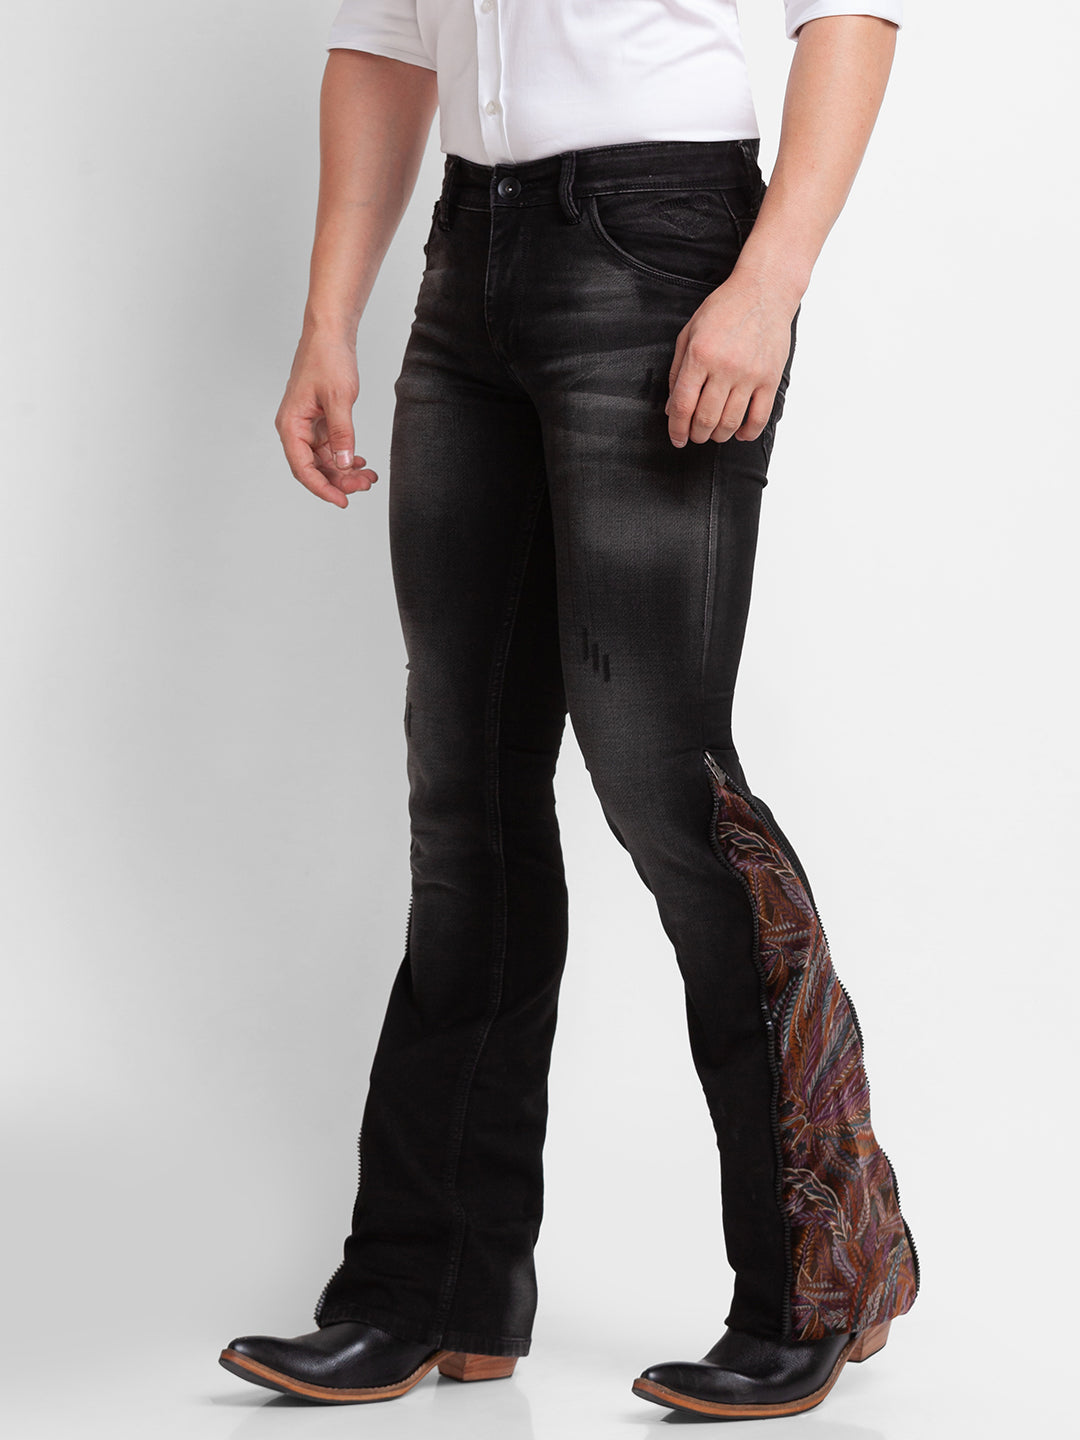 Charcoal Black Zipped Bottom Bootcut Jeans